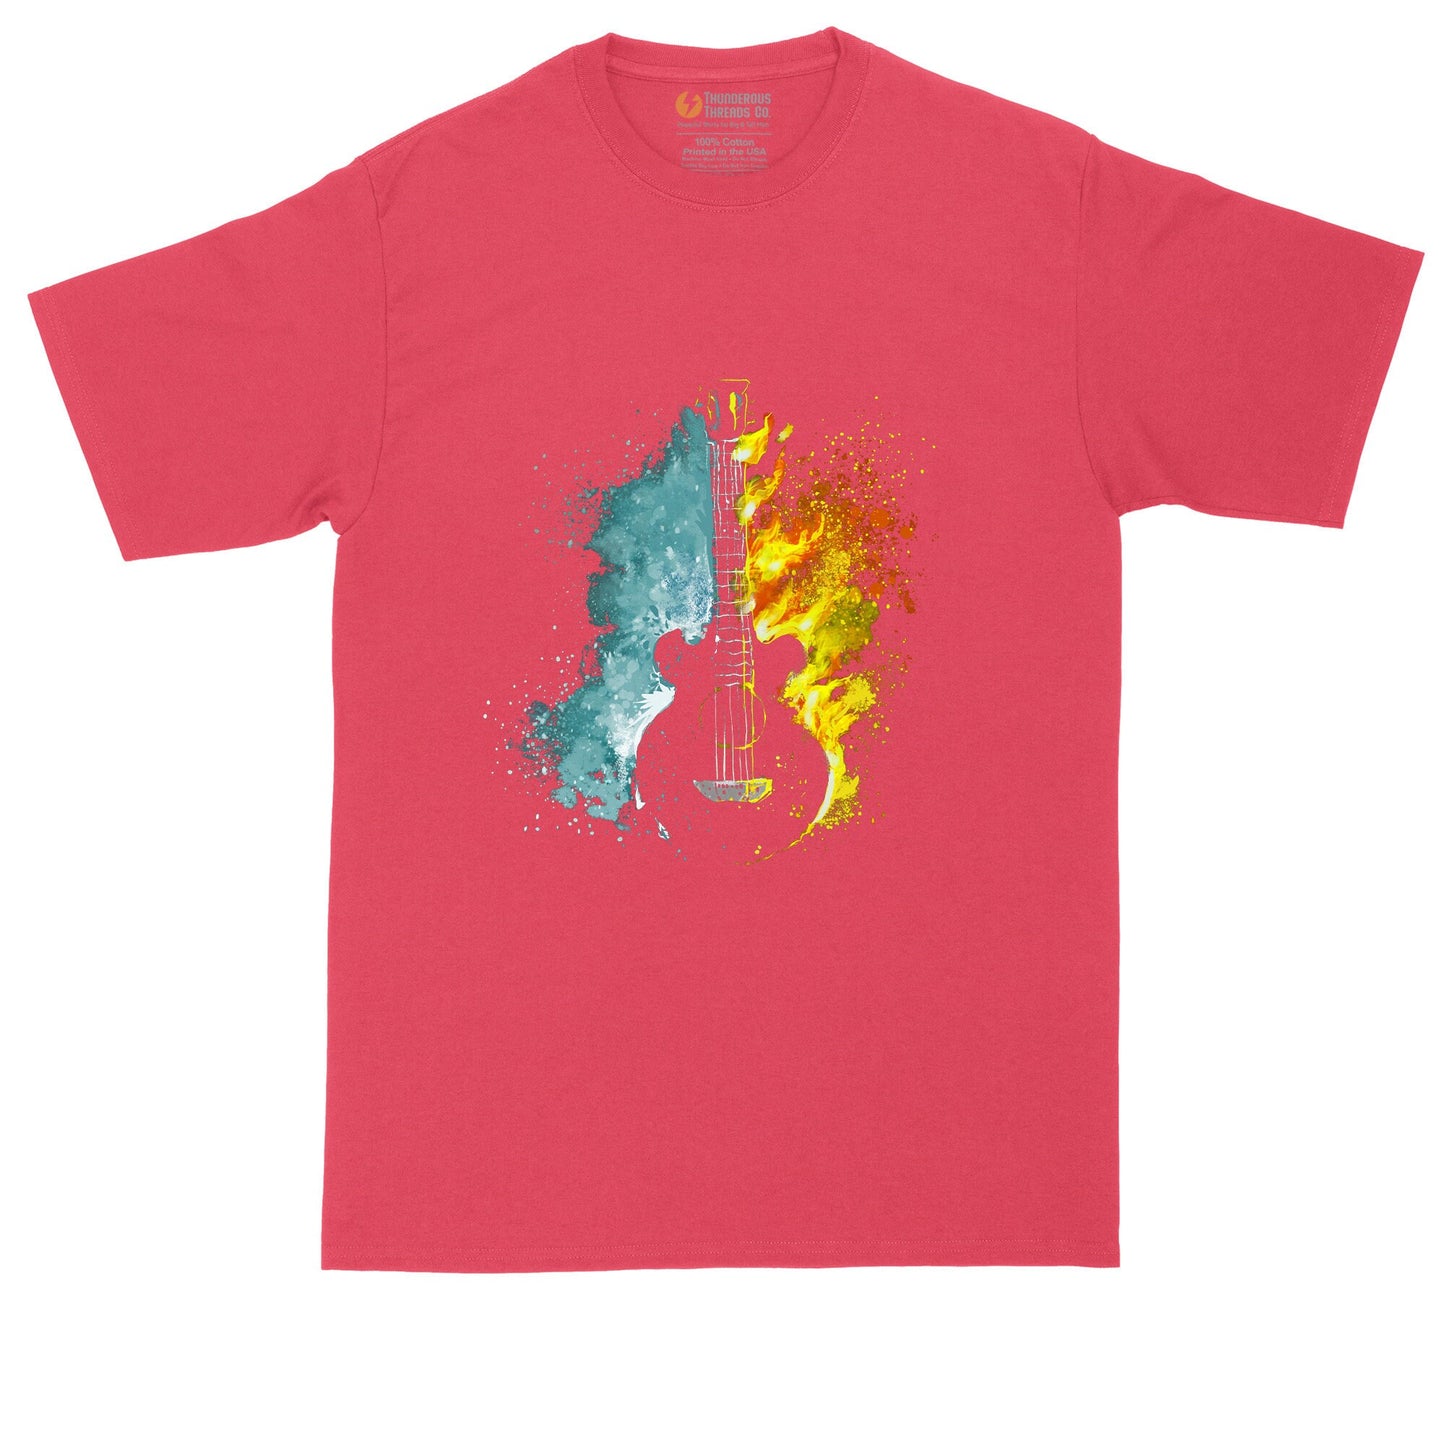 Fire and Water Guitar Design | Music Shirt | Guitar Player Shirt | Mens Big and Tall T-Shirt